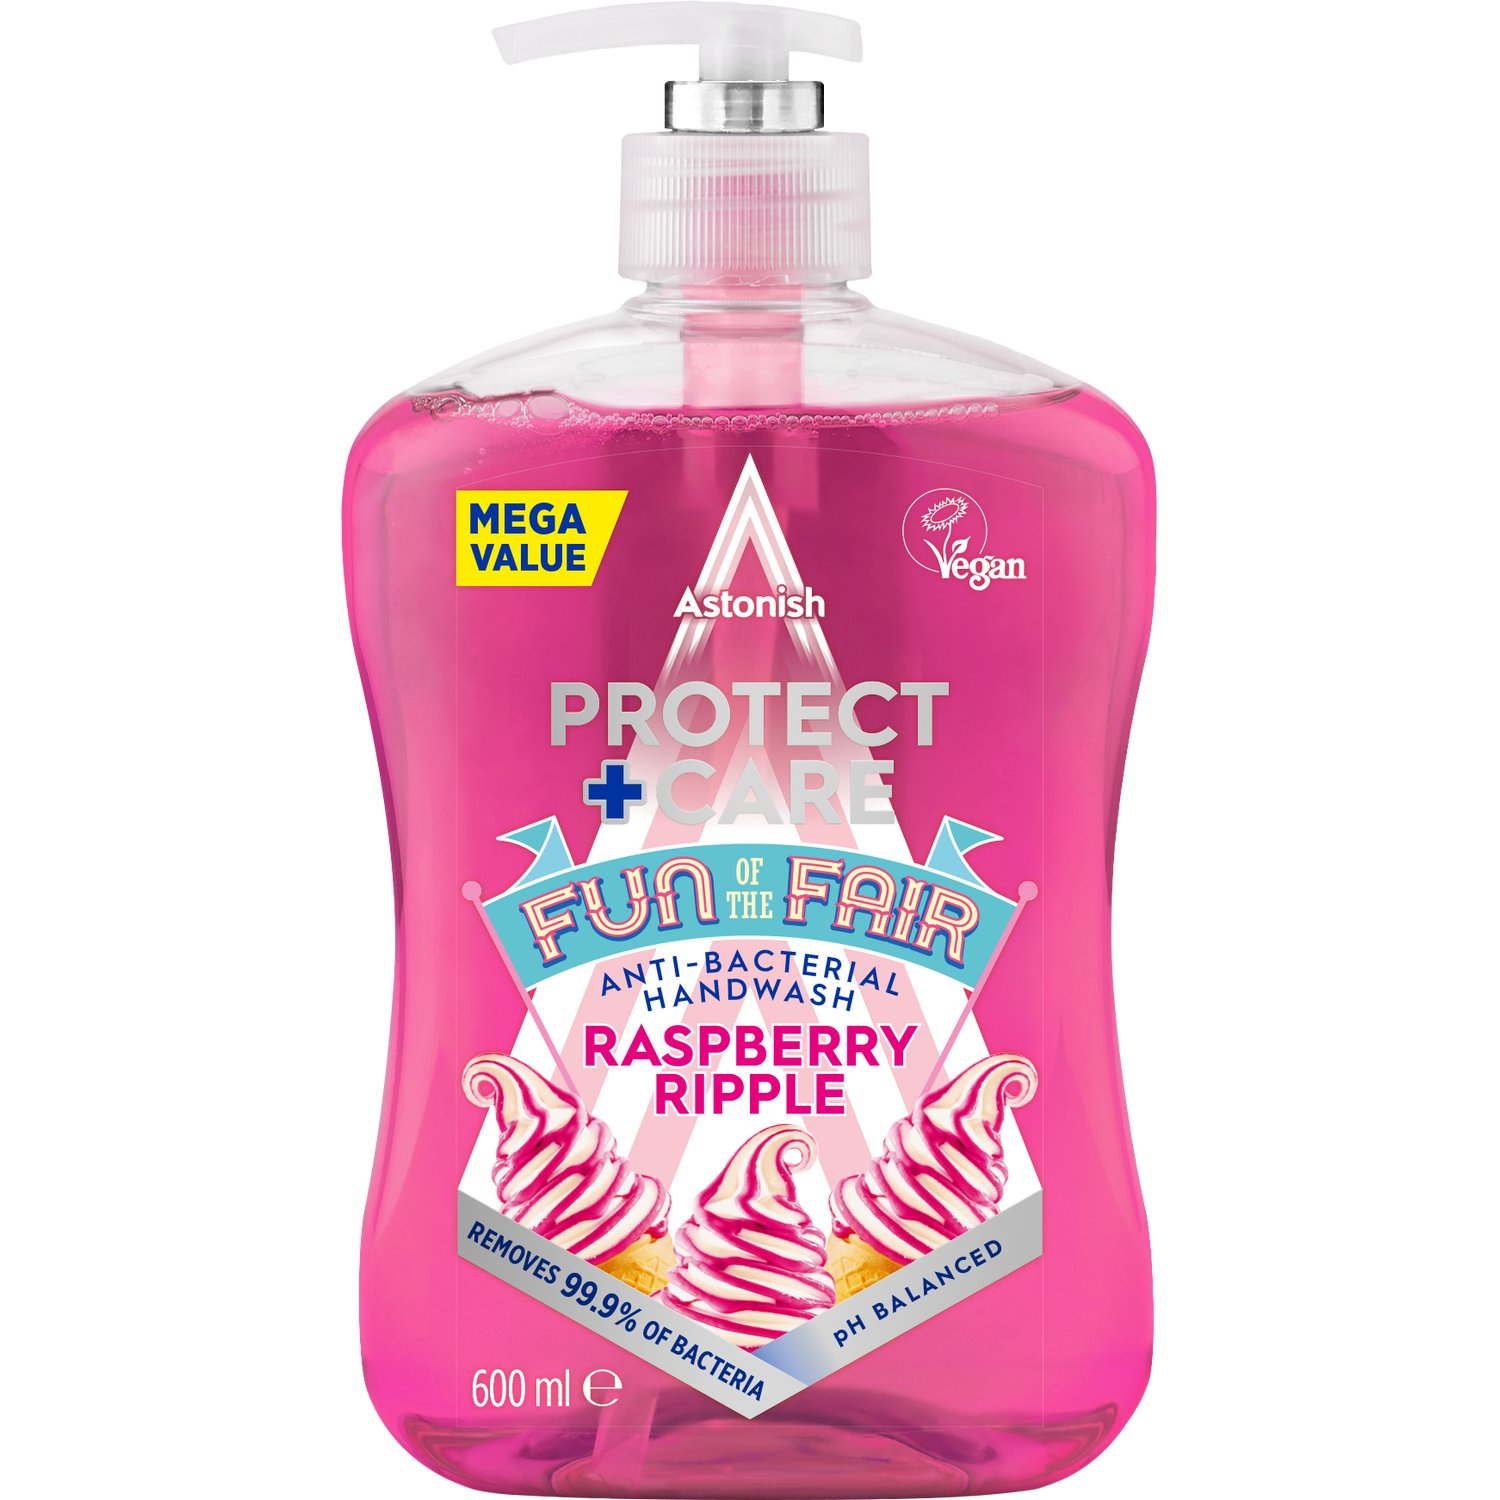 Astonish Protect & Care Raspberry Ripple Anti-Bacterial Handwash - Pink Image